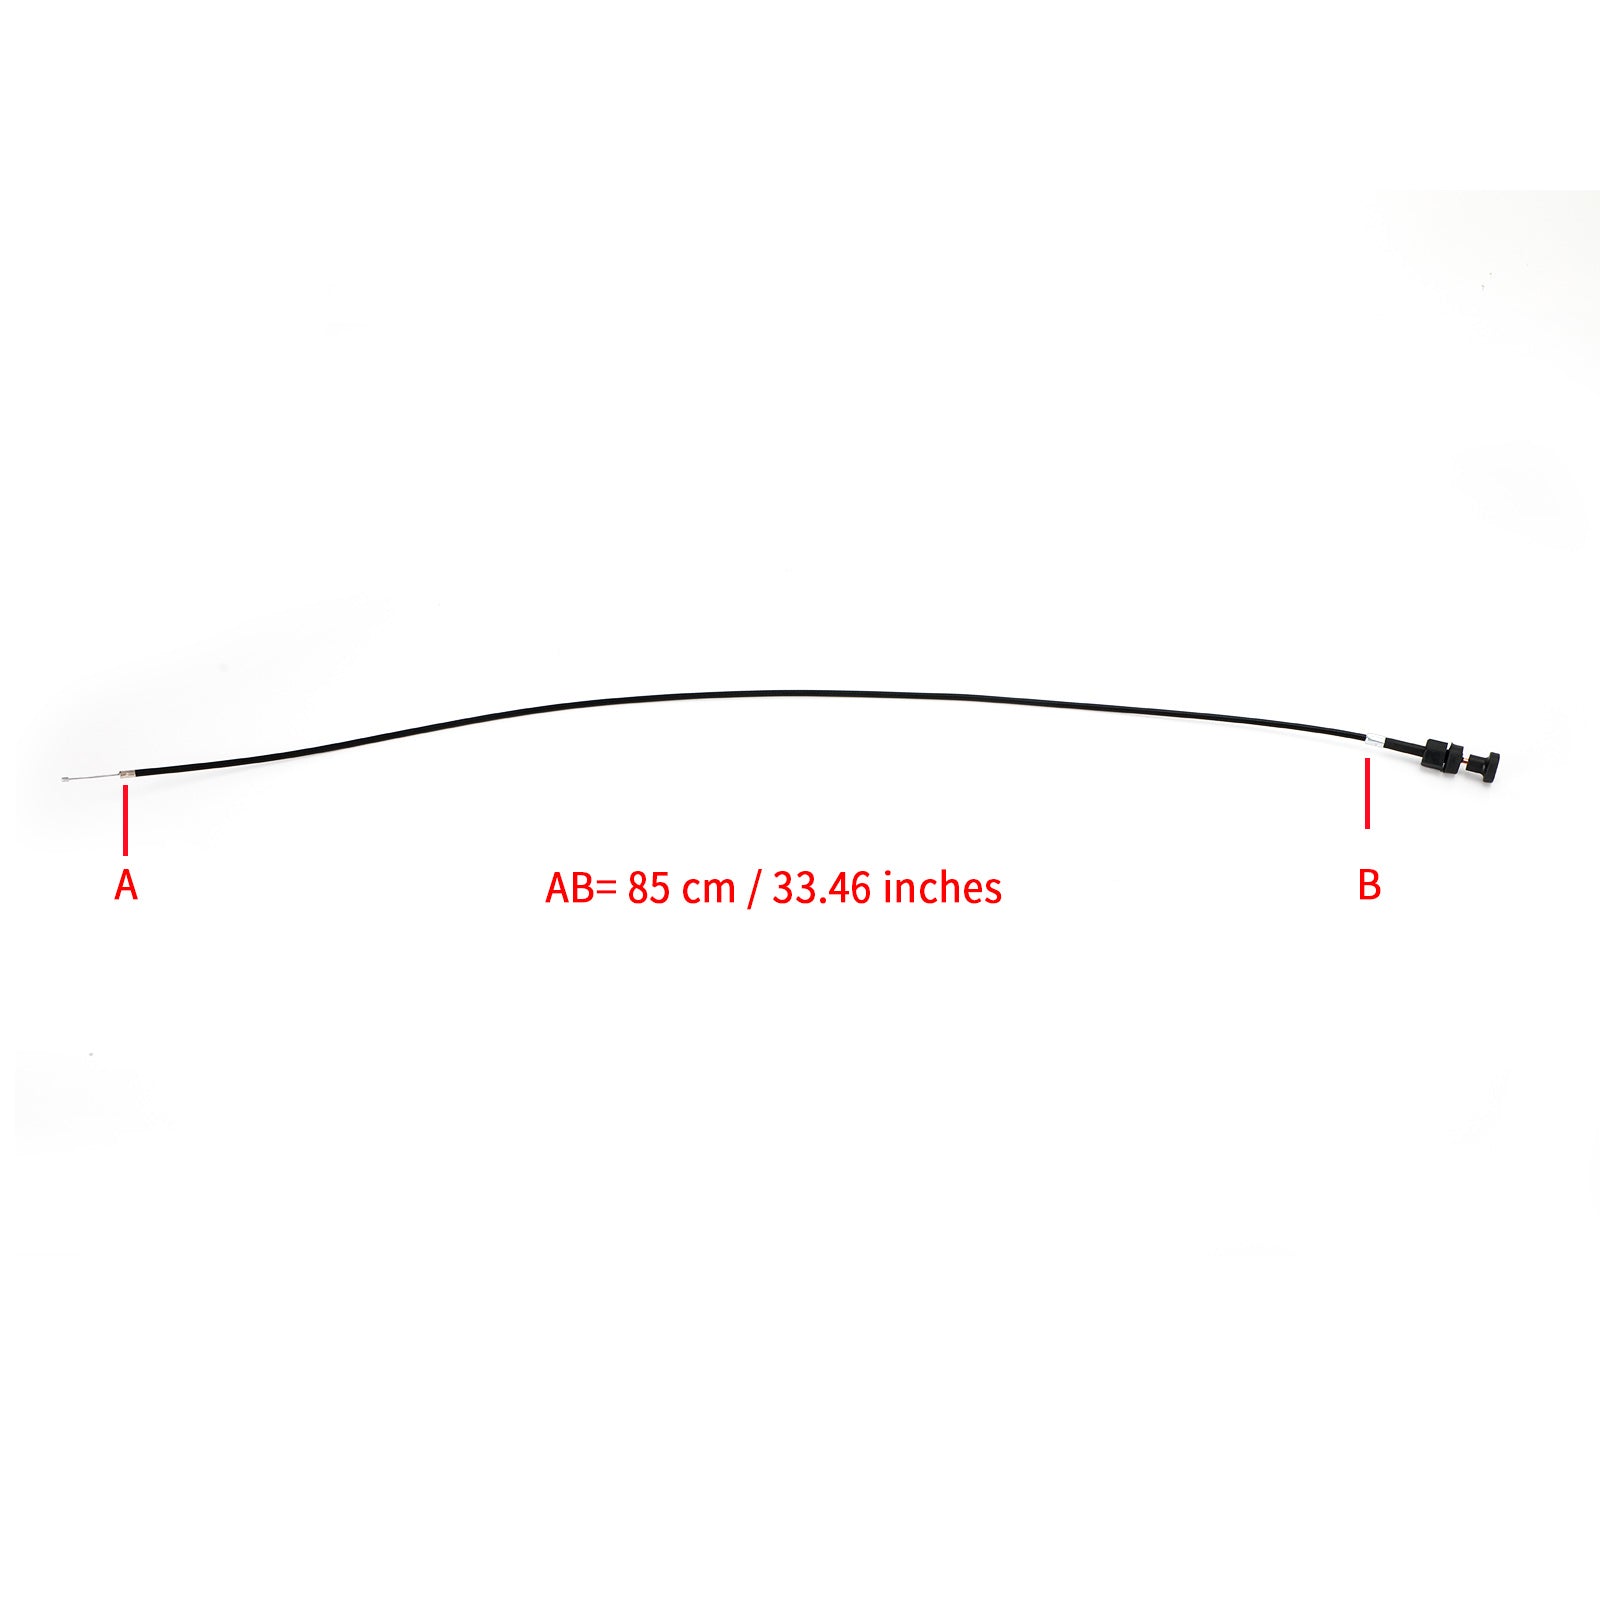 4x Carburetor Choke Cable Plunger Kit fit for Honda Rancher TRX350 FM TM 00-06 Generic